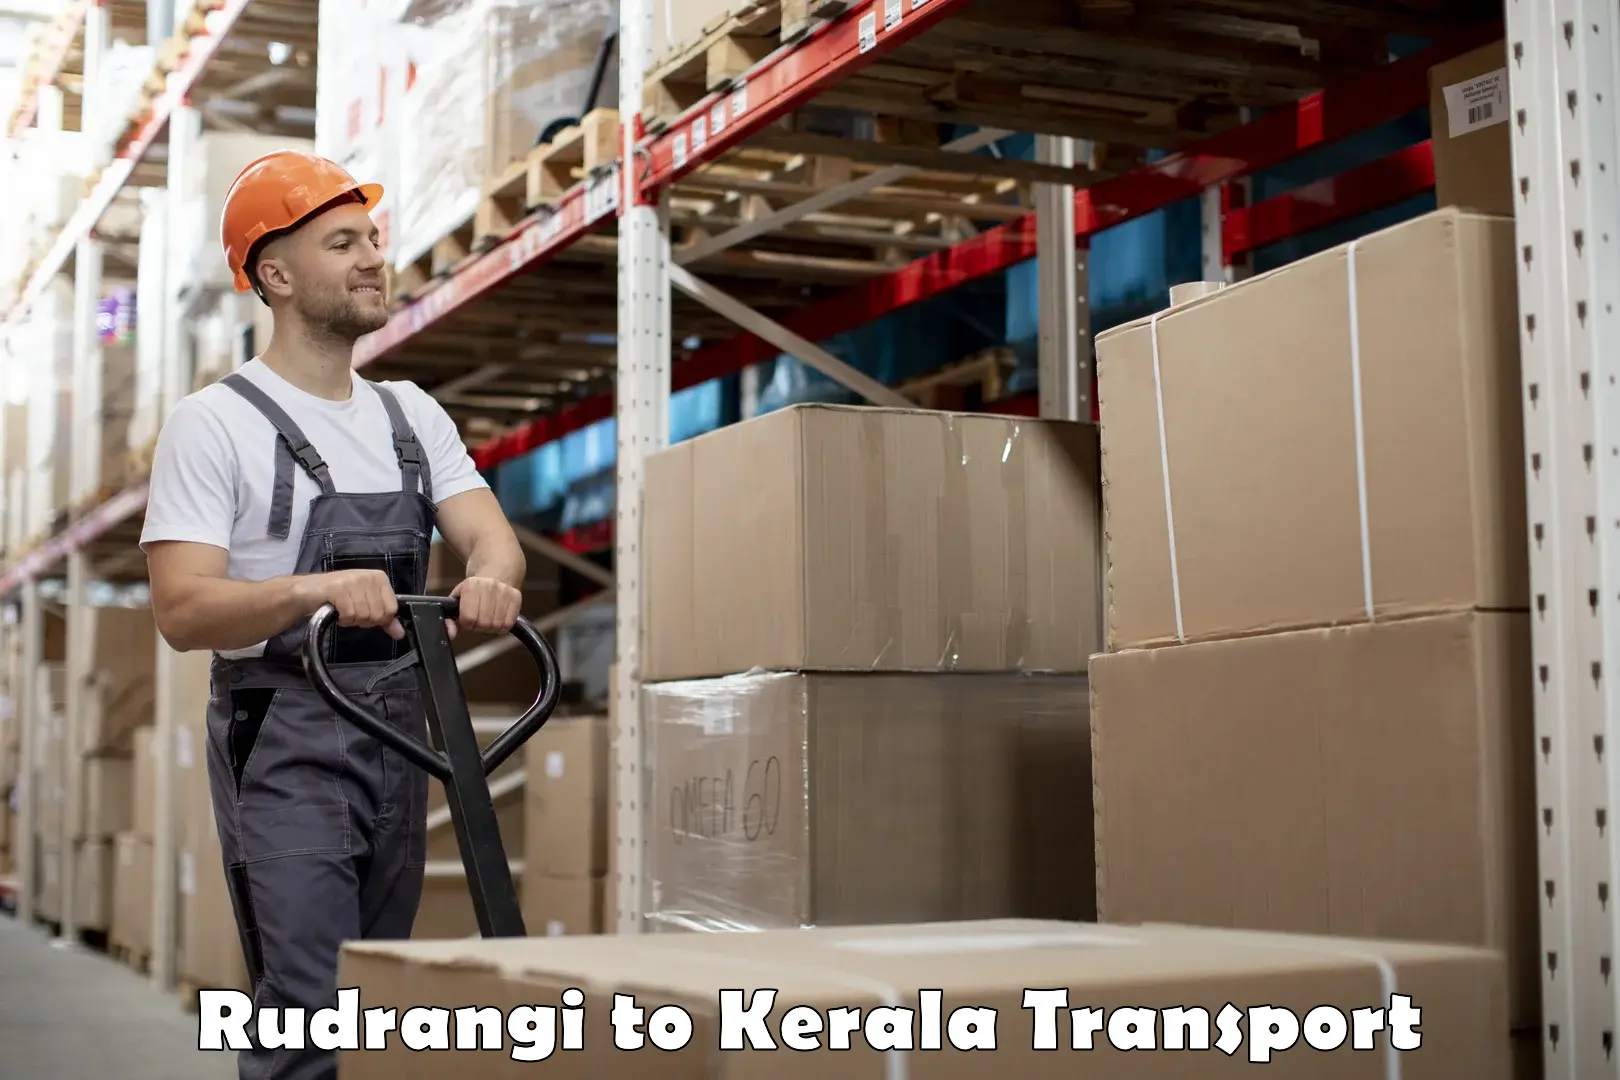 Delivery service Rudrangi to Kerala